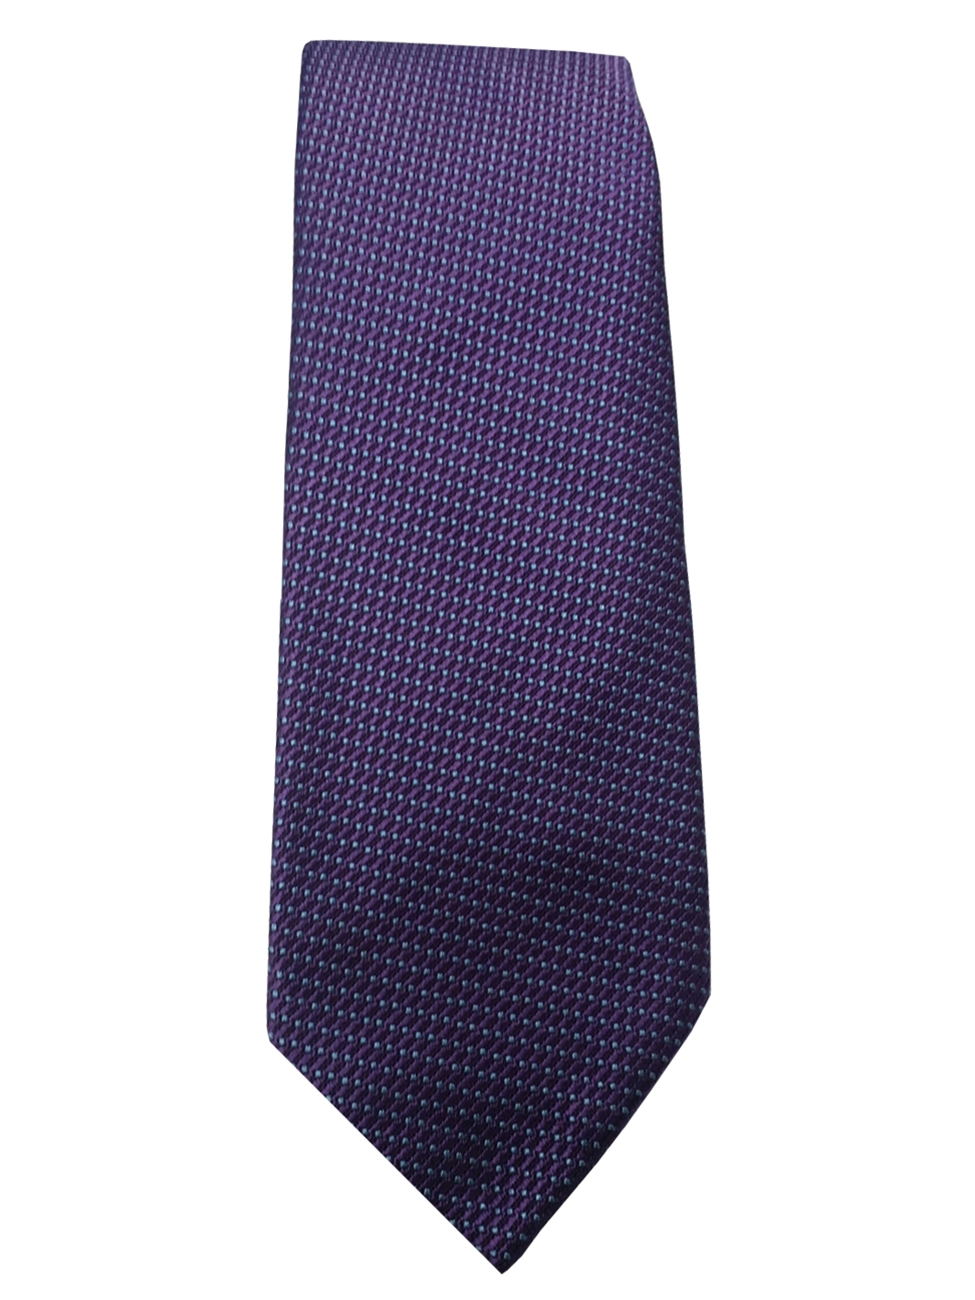 Robert Talbott Purple With Tiny White Ploka Dots 7 Fold Sudbury Tie ...